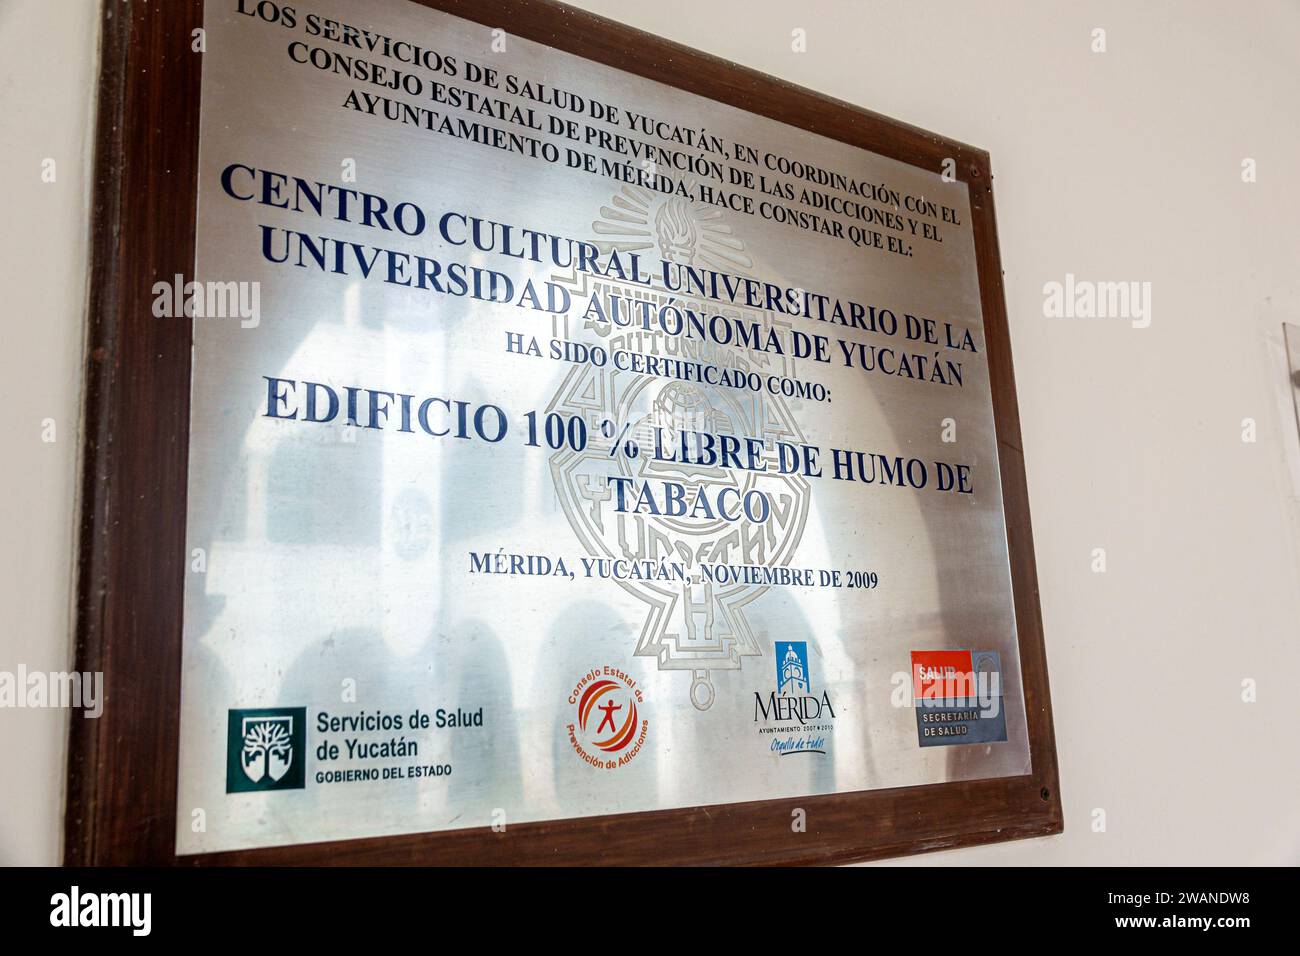 Merida Mexico,centro historico central historic district,plaque,Centro Cultural Universitario de la Universidad Autonoma de Yucatan,autonomous univers Stock Photo